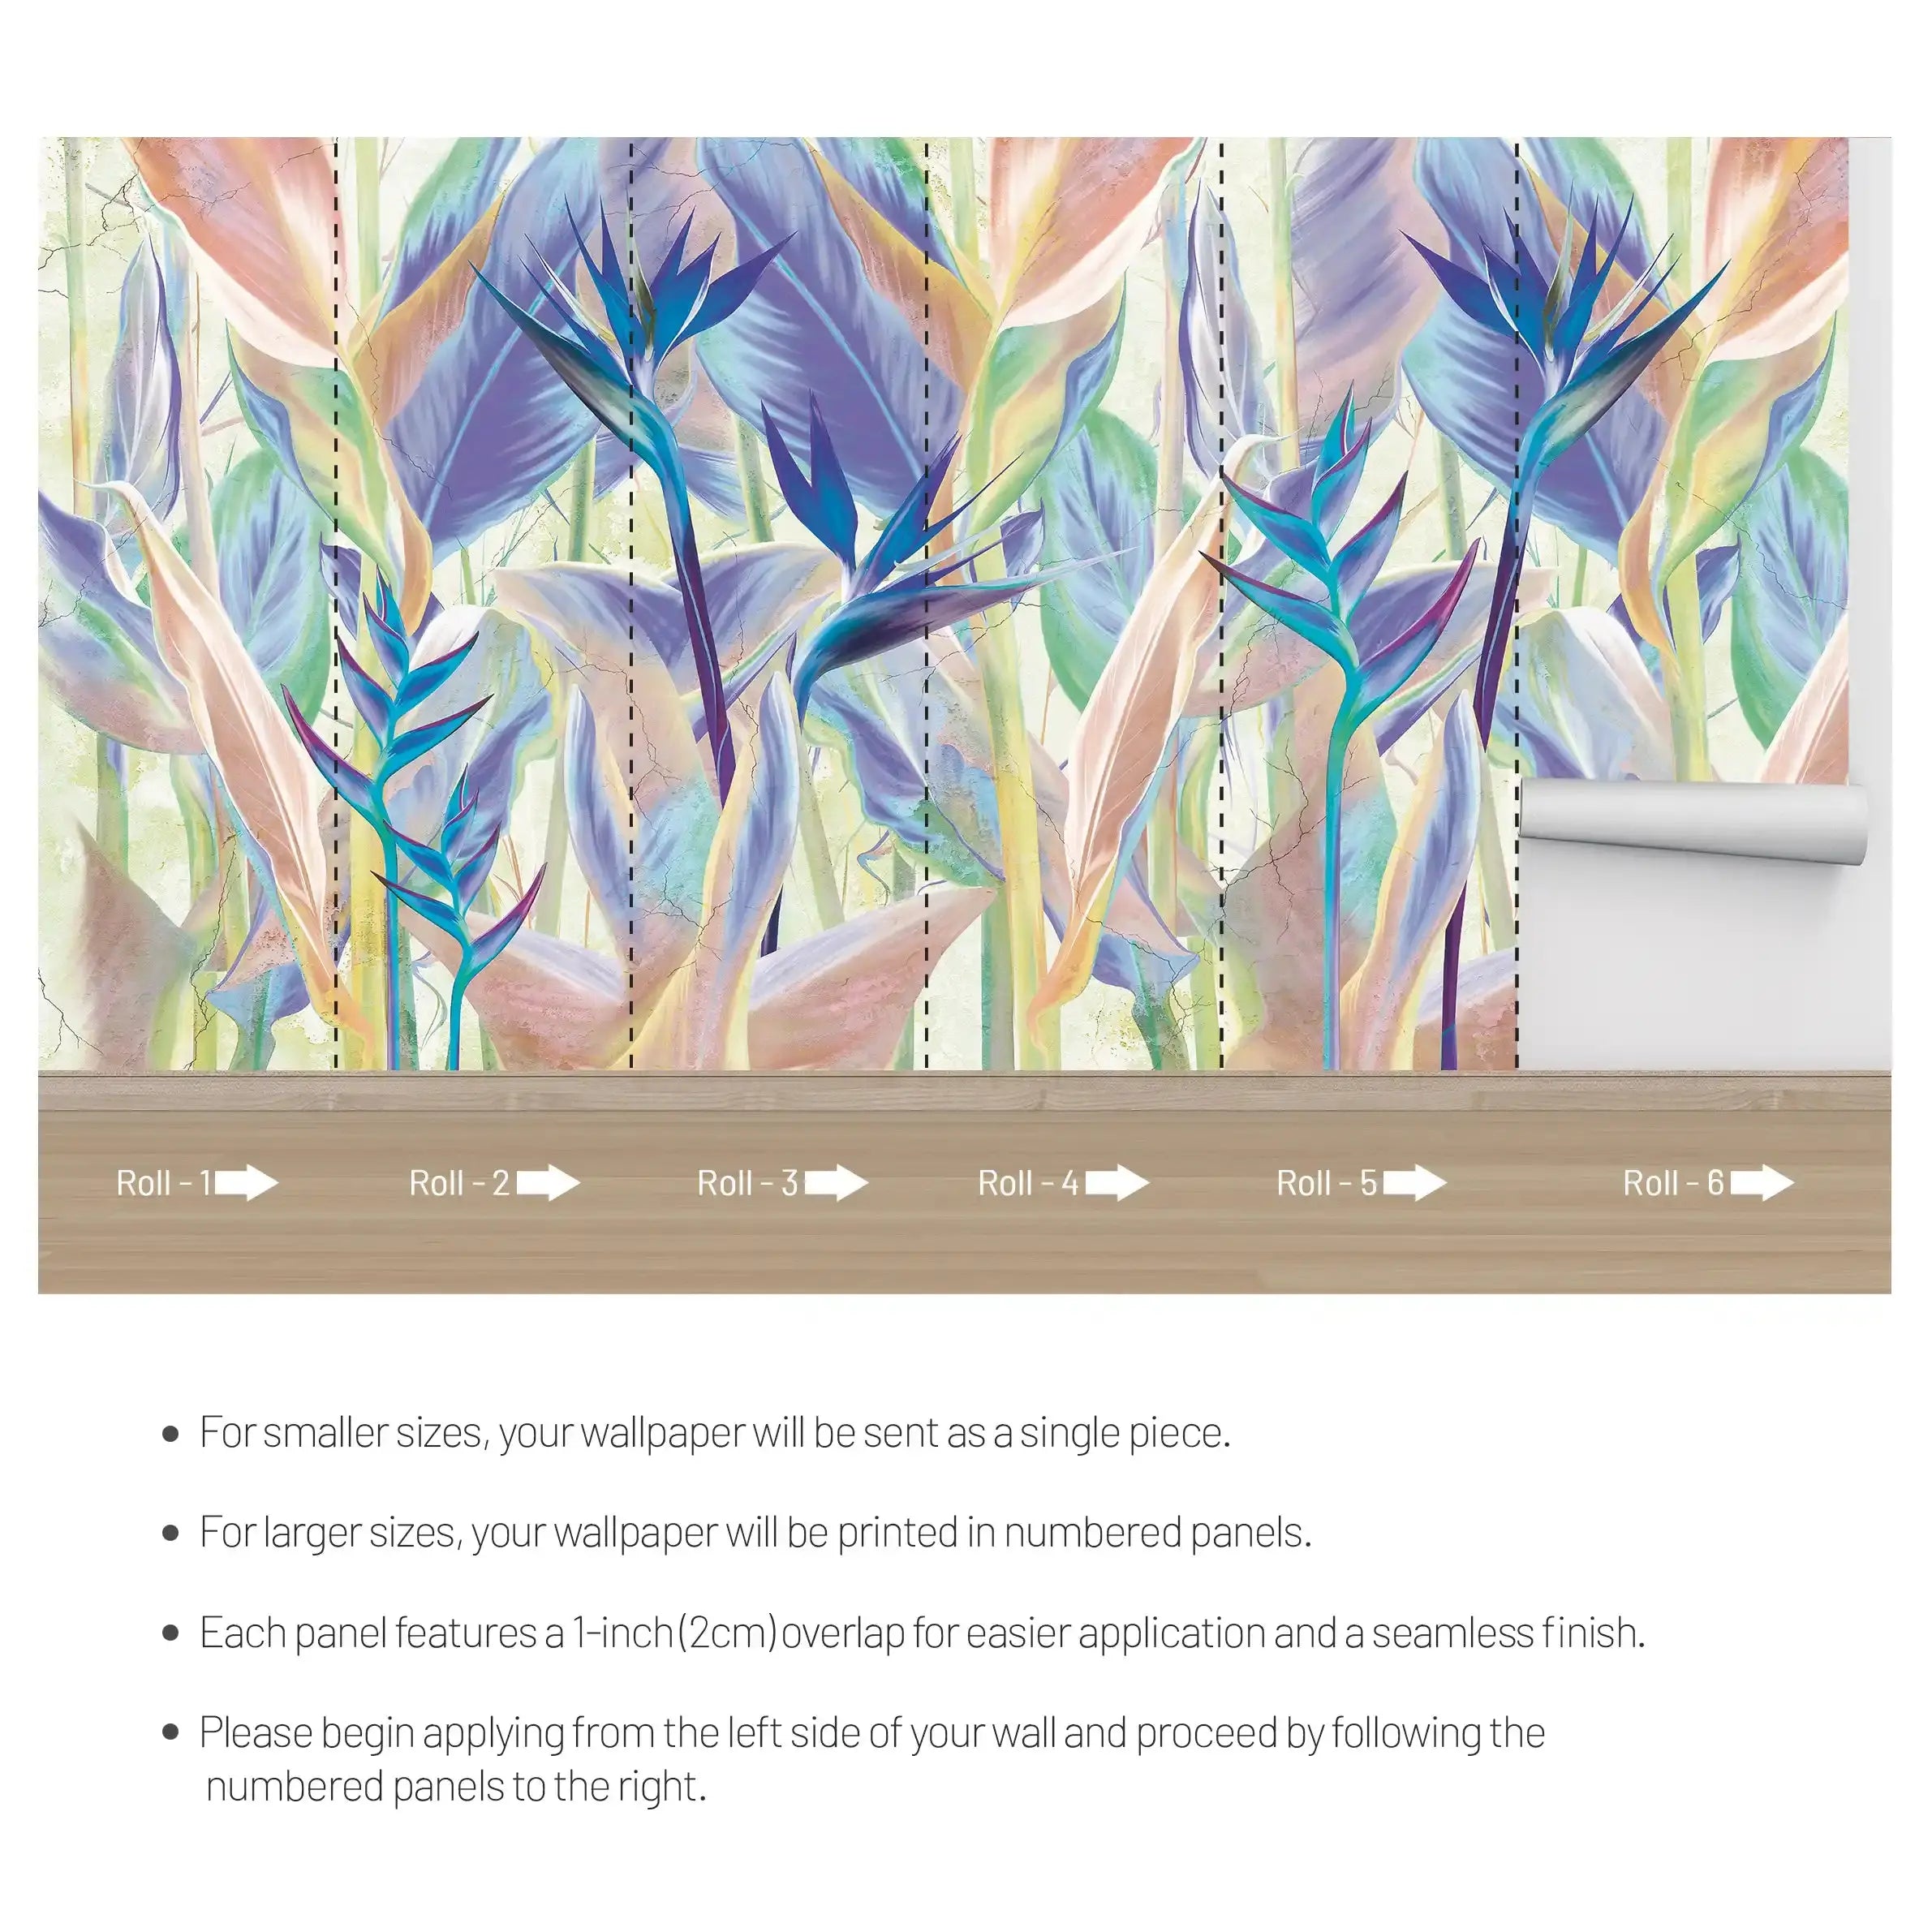 3006-C / Peel and Stick Botanical Wallpaper - Bird of Paradise Design, Easy Install Wall Mural - Artevella